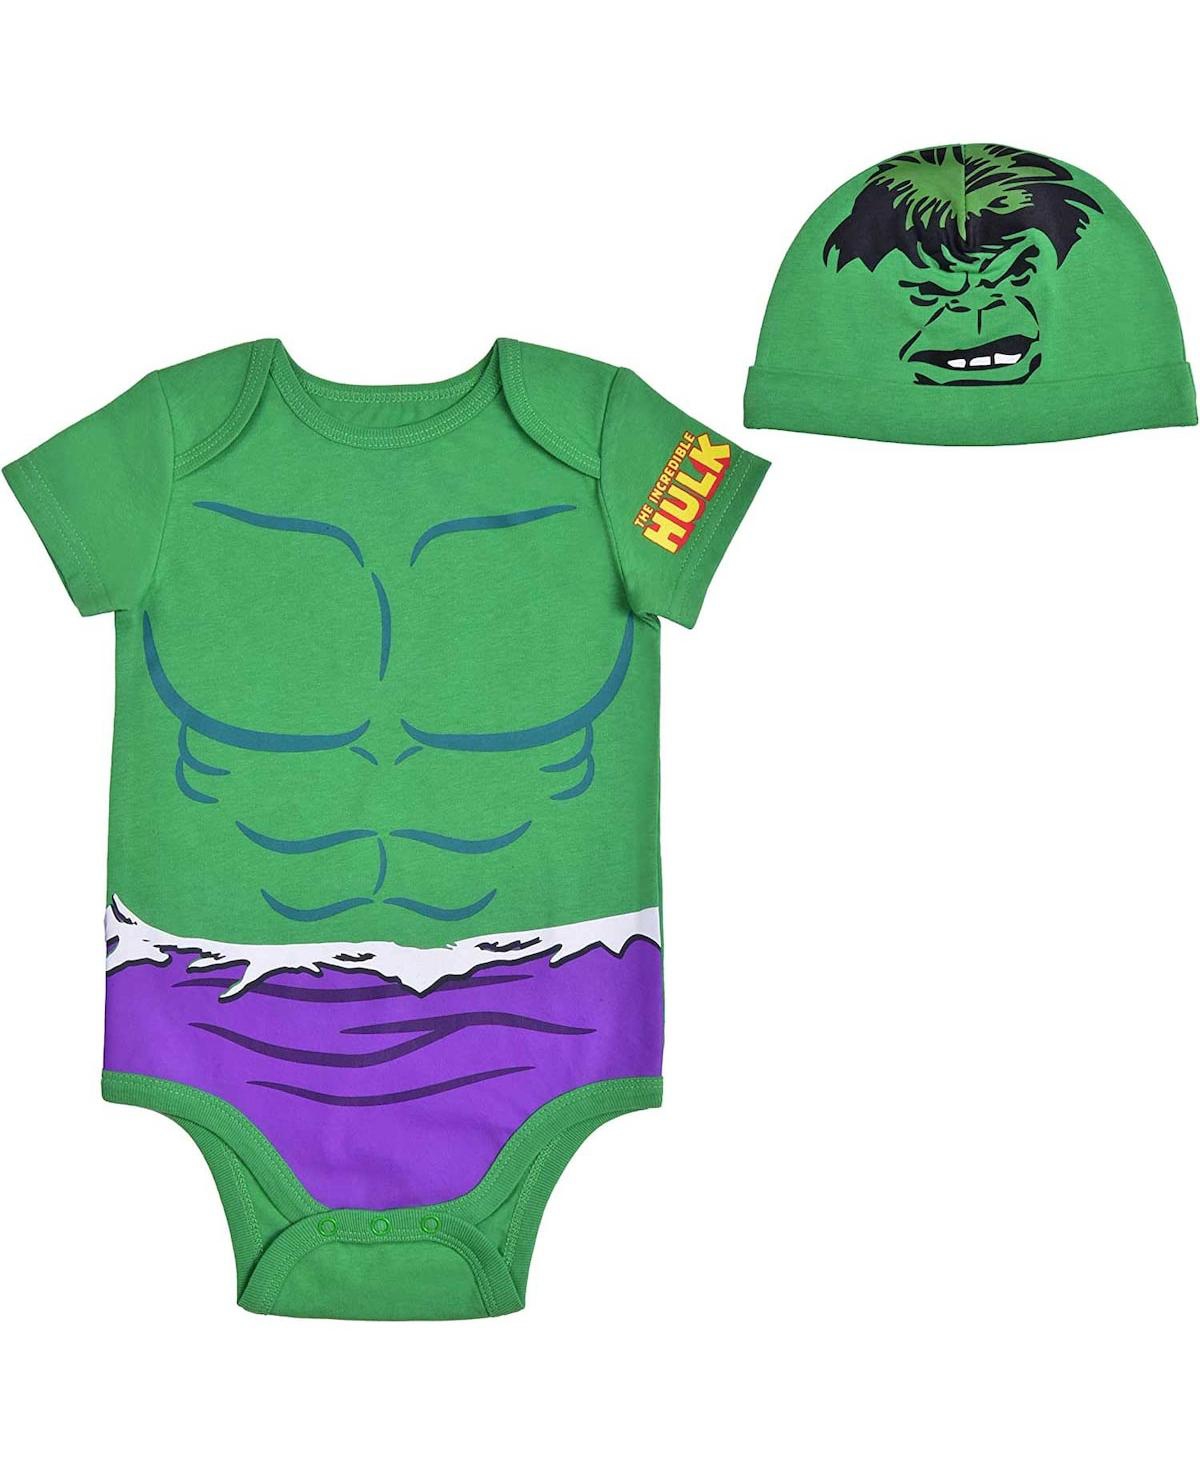 Shop Children's Apparel Network Baby Boys And Girls Green Hulk Bodysuit And Hat Set